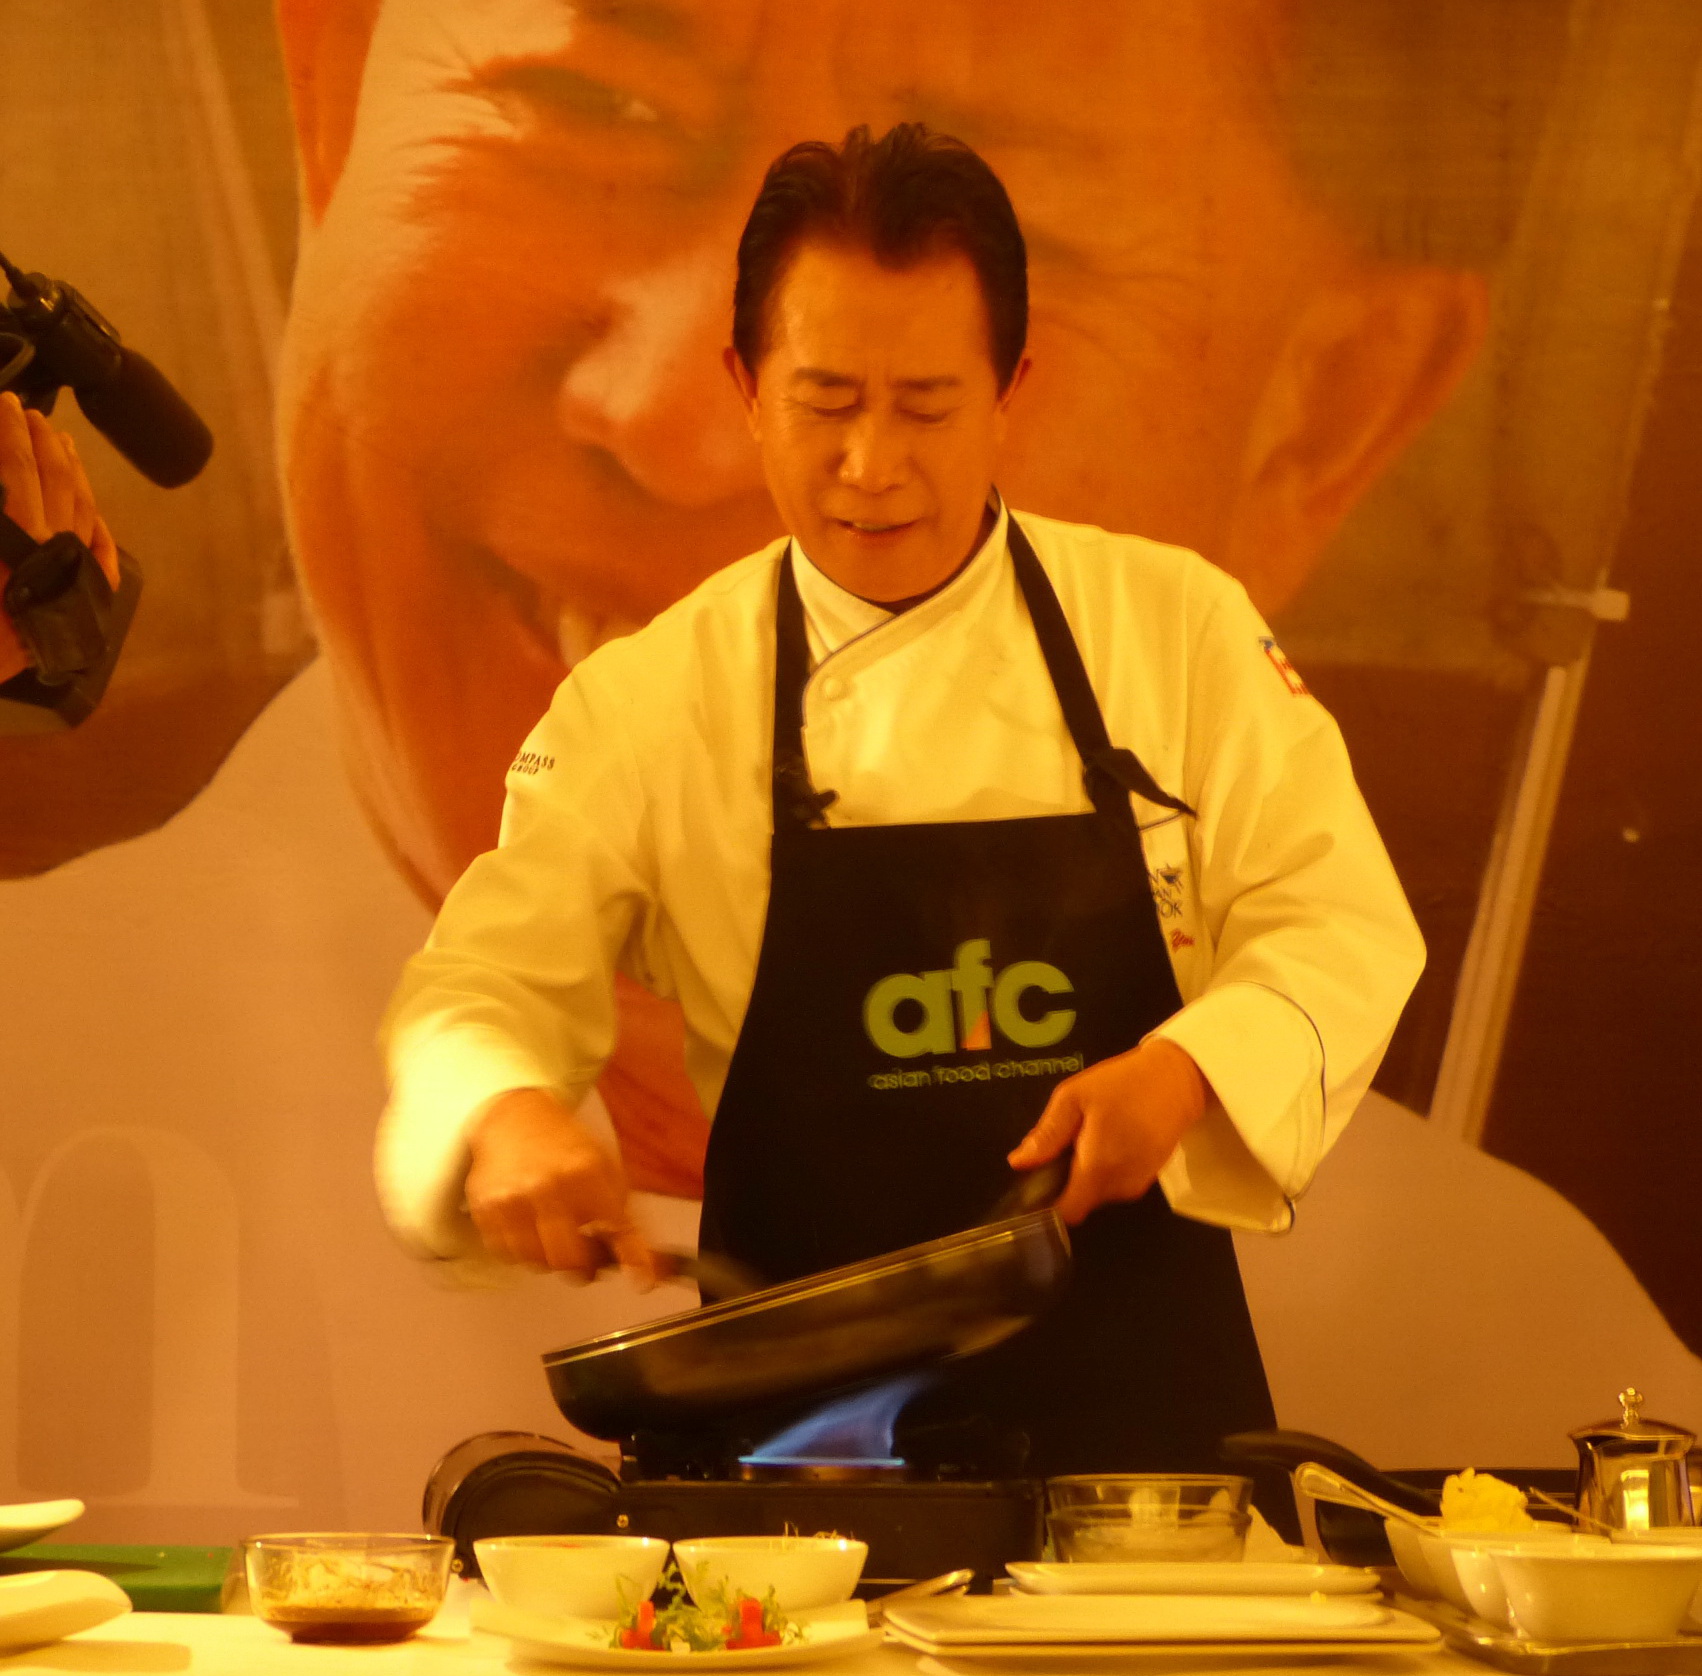 Asian Food Channel to air Vietnam cuisine, tourism series next month